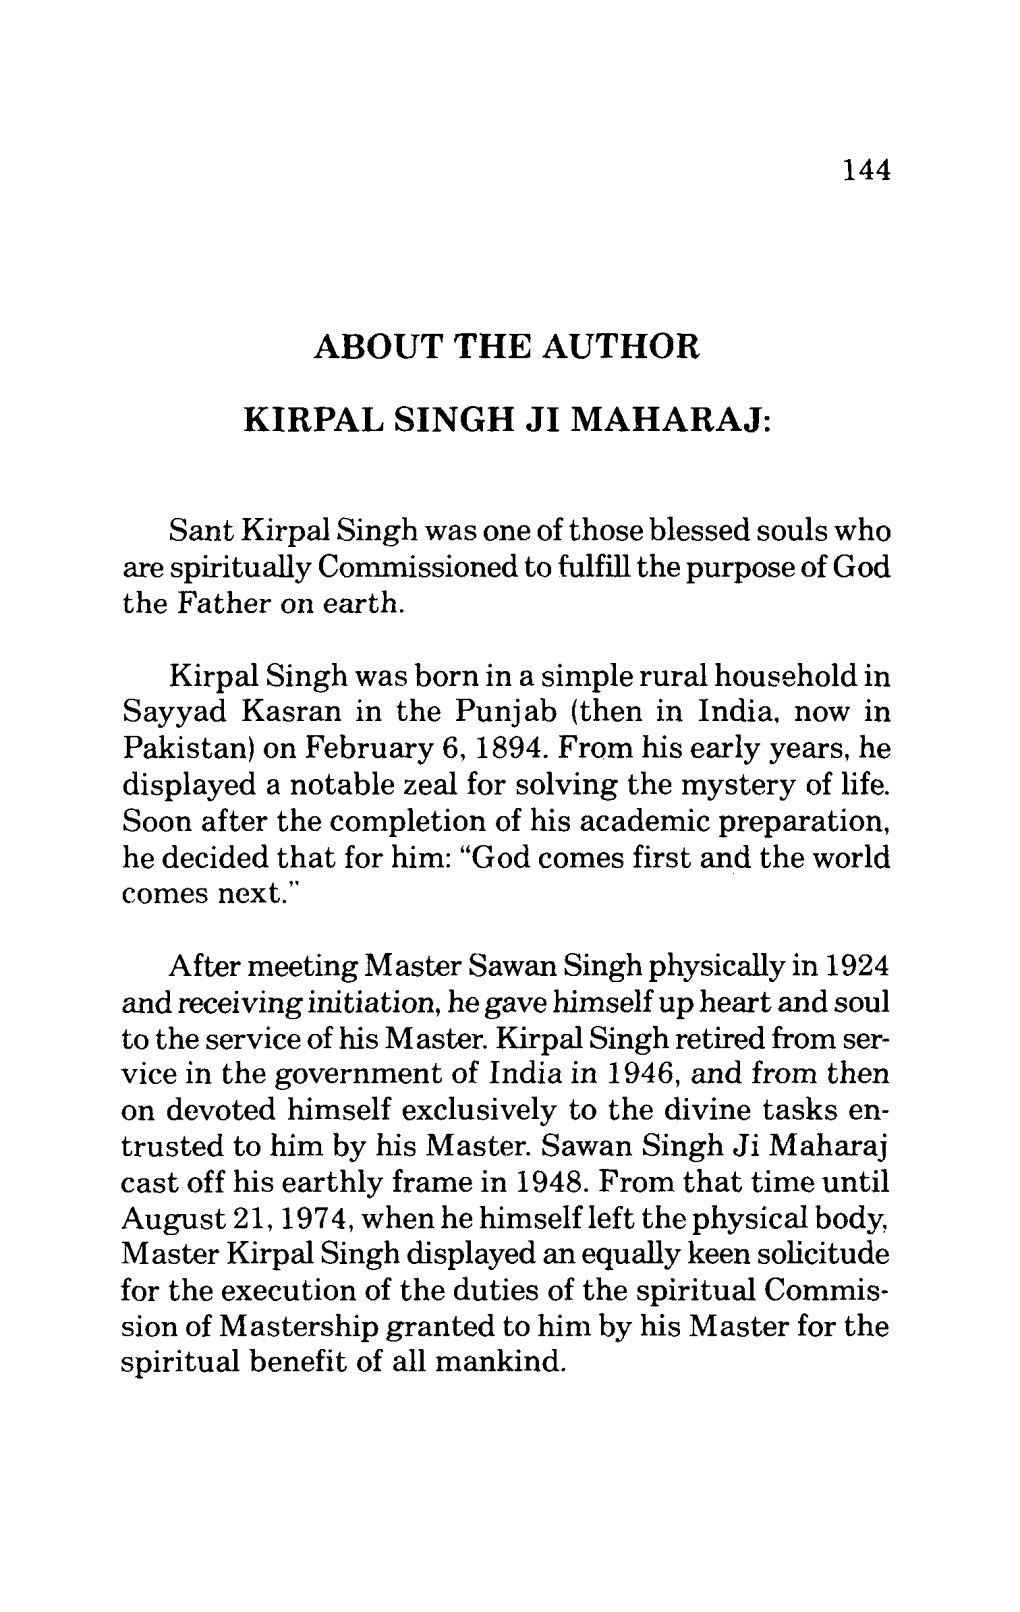 About the Author Kirpal Singh Ji Maharaj